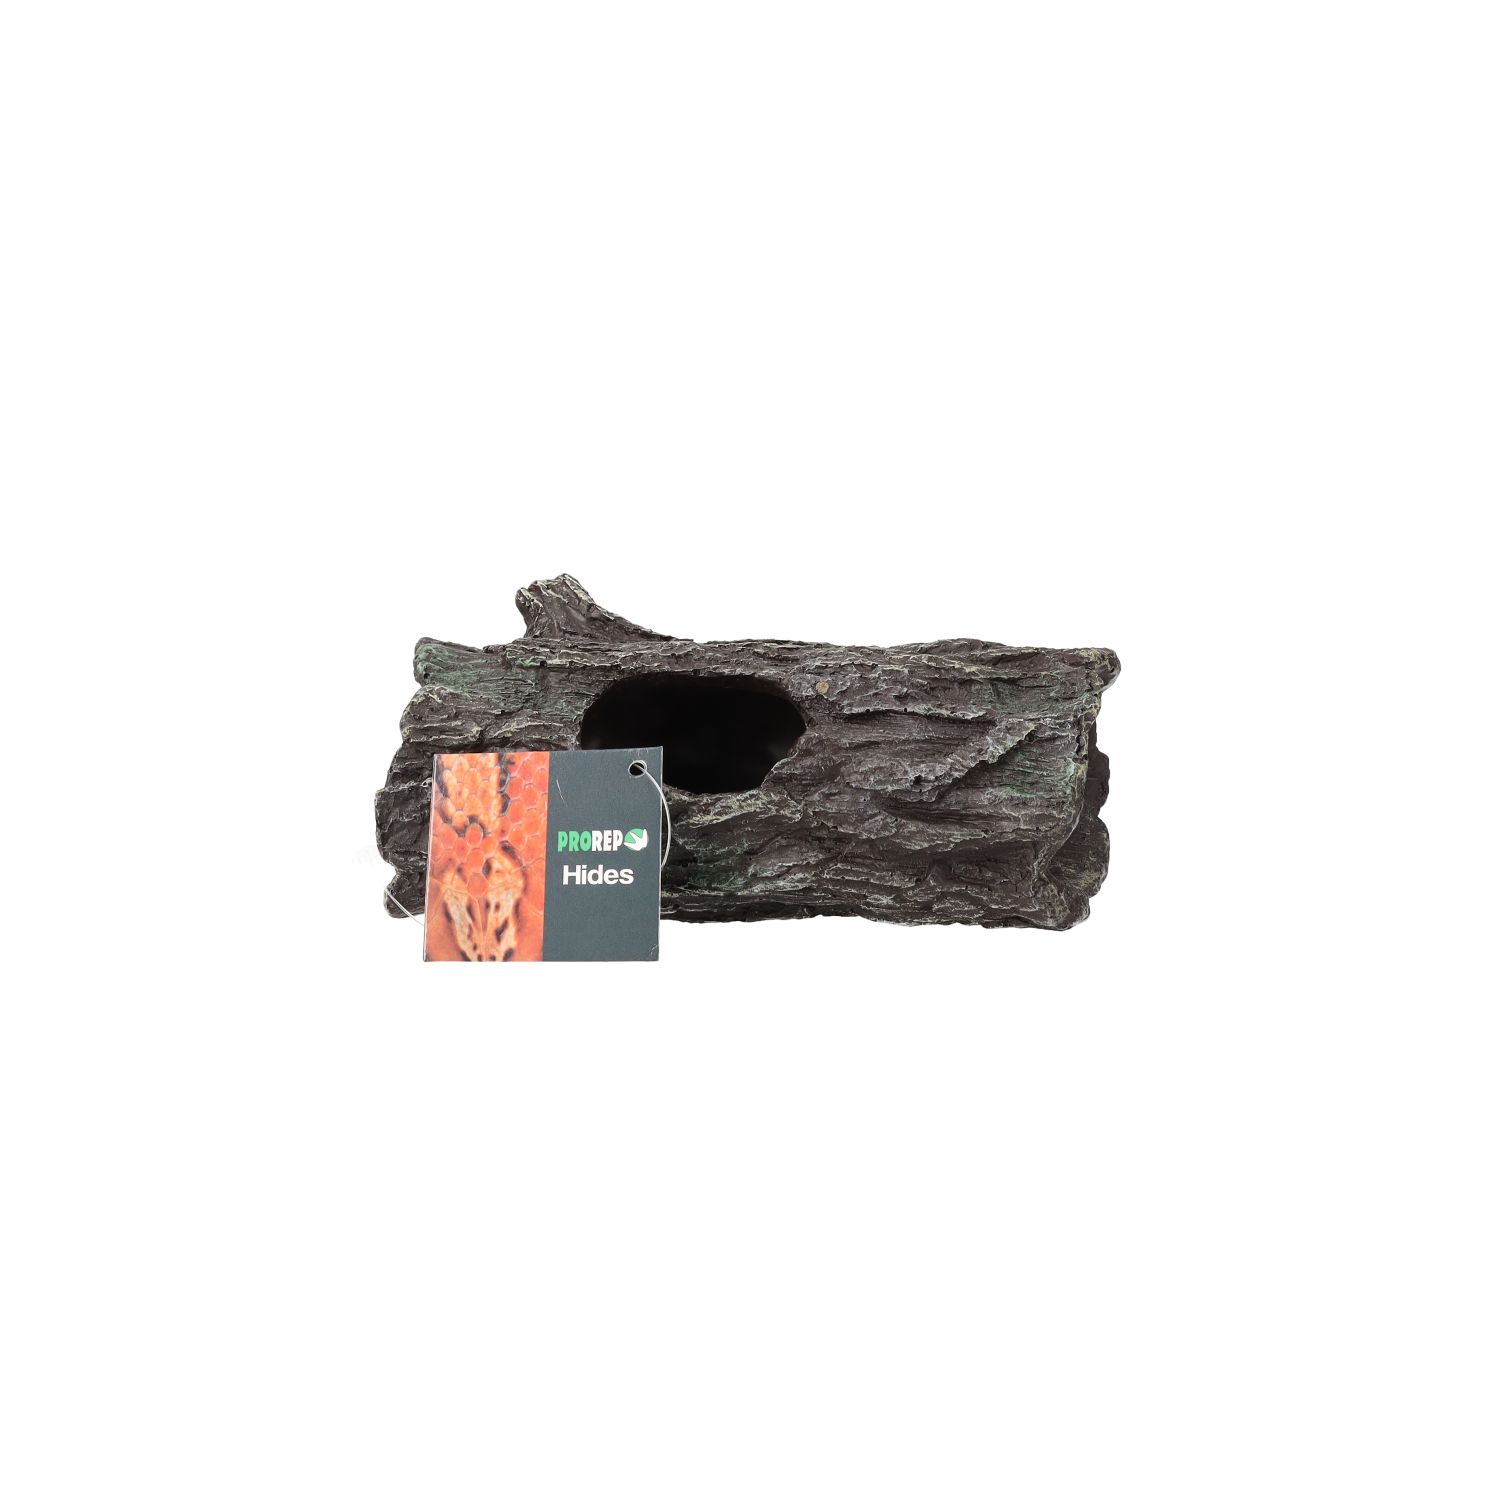 PR Dark Wood Log Hide Sm 14.5x7x7cm DPH090